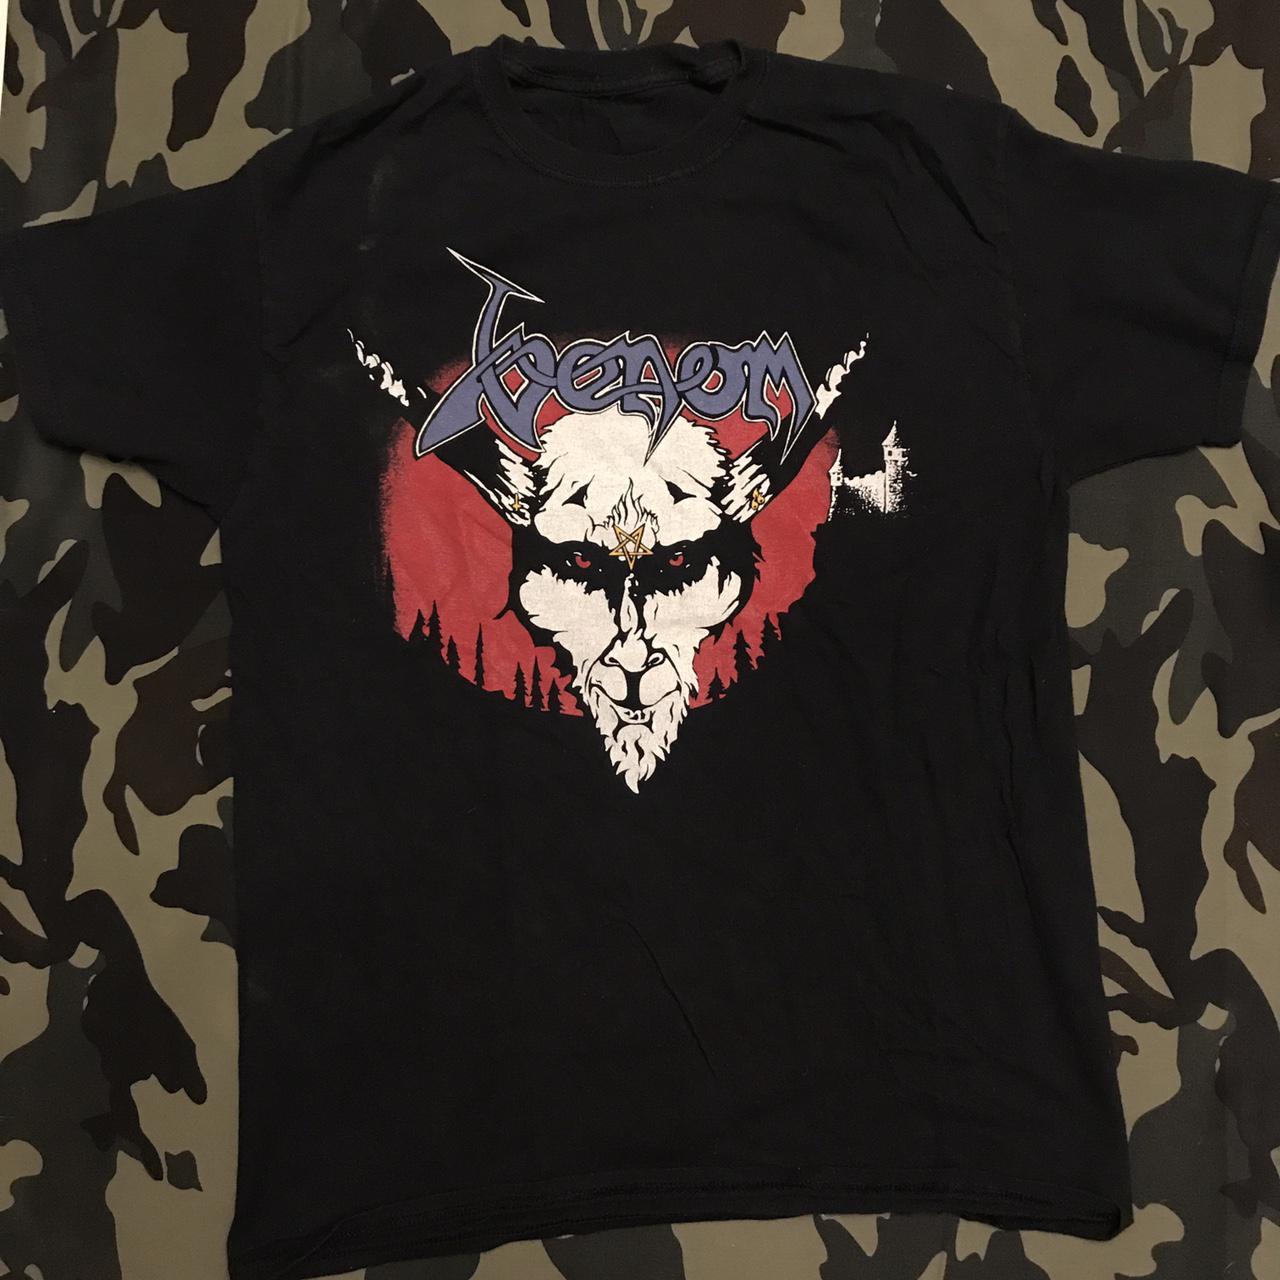 Product Image 1 - Venom- US Legions shirt. Double